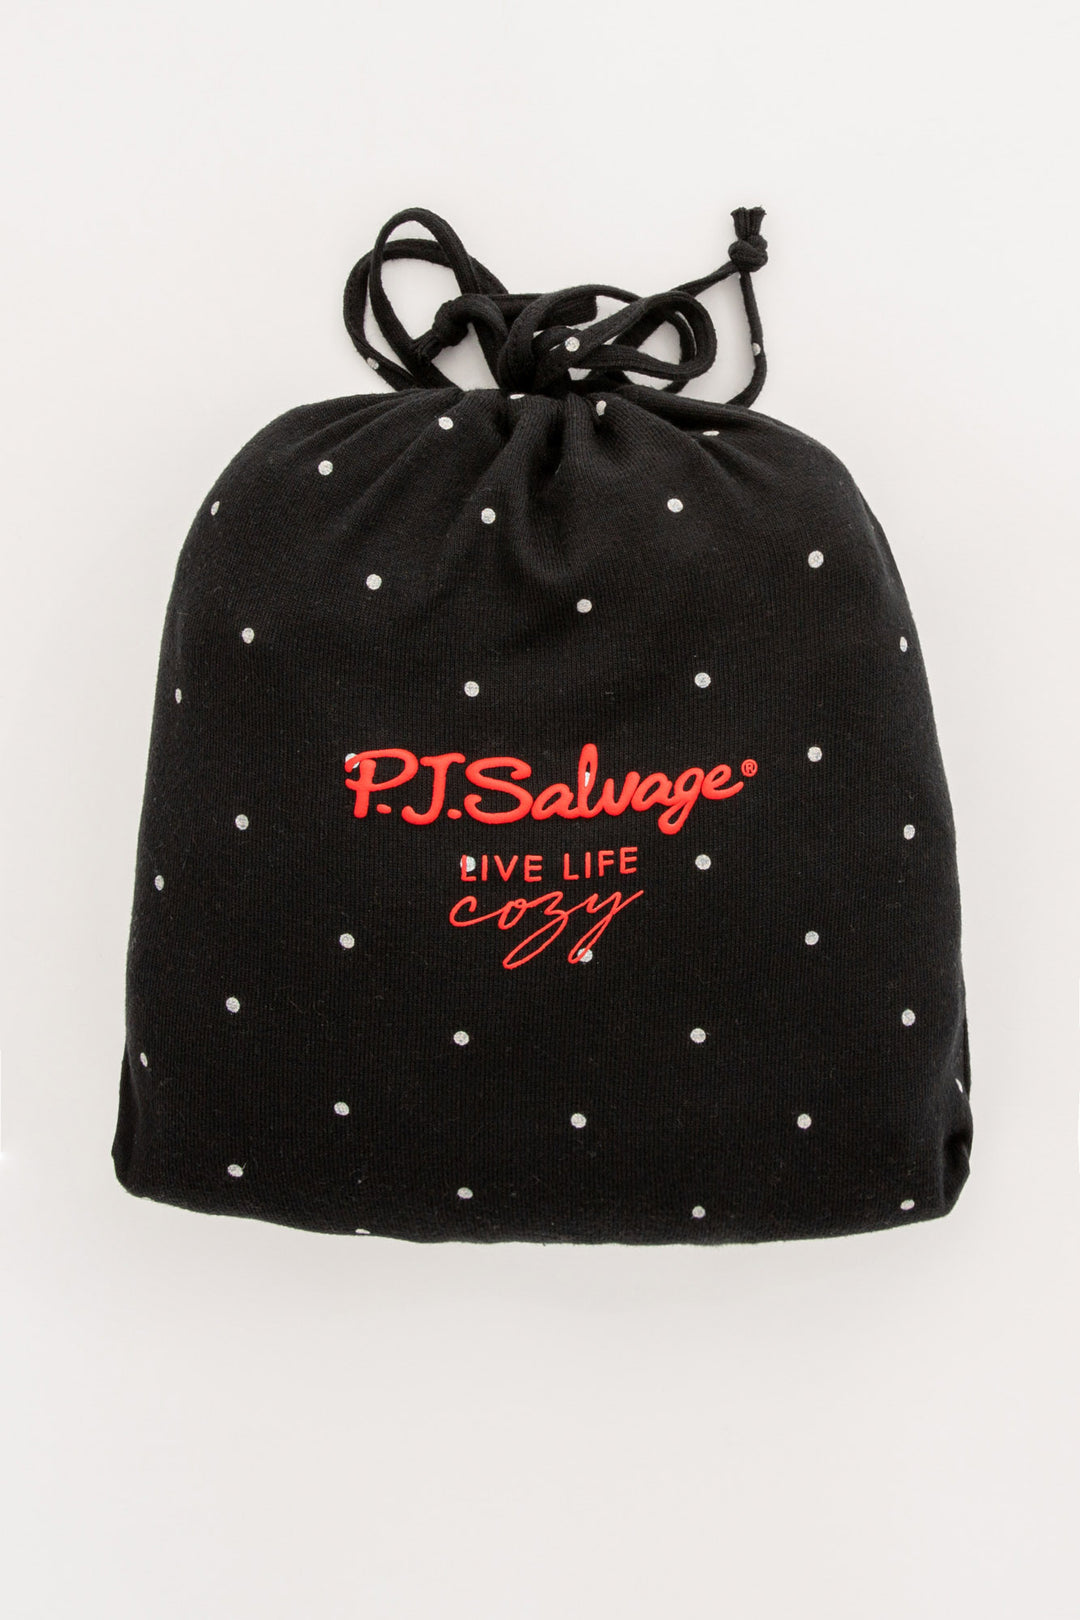 Black pajama set in matching gift bag. Dot-print top & pj pant & red /ribbon tie, in Repreve soft knit. (7200024297572)